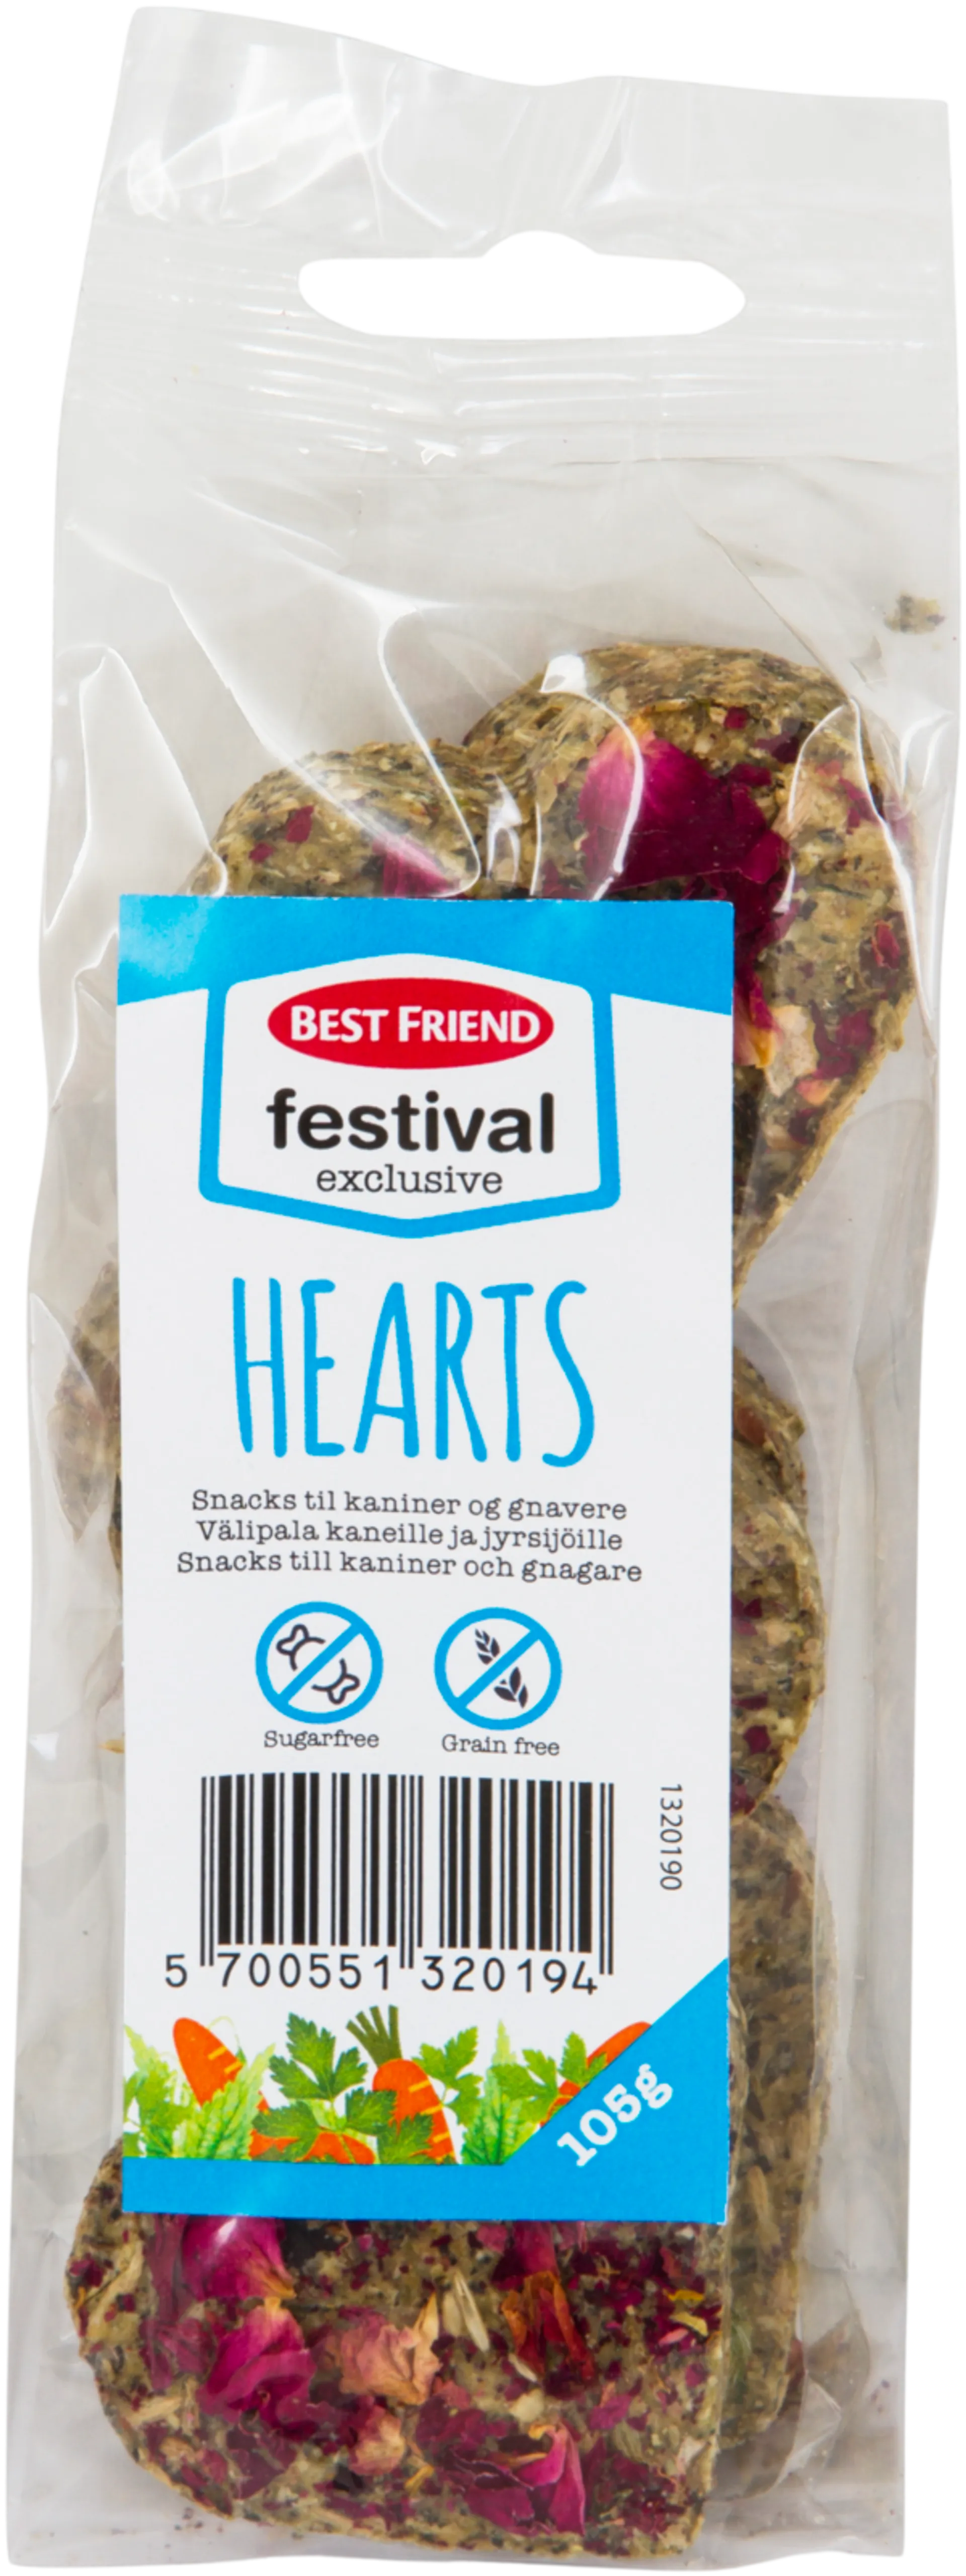 Best Friend Festival Exclusive 105g Sydän-snacksit